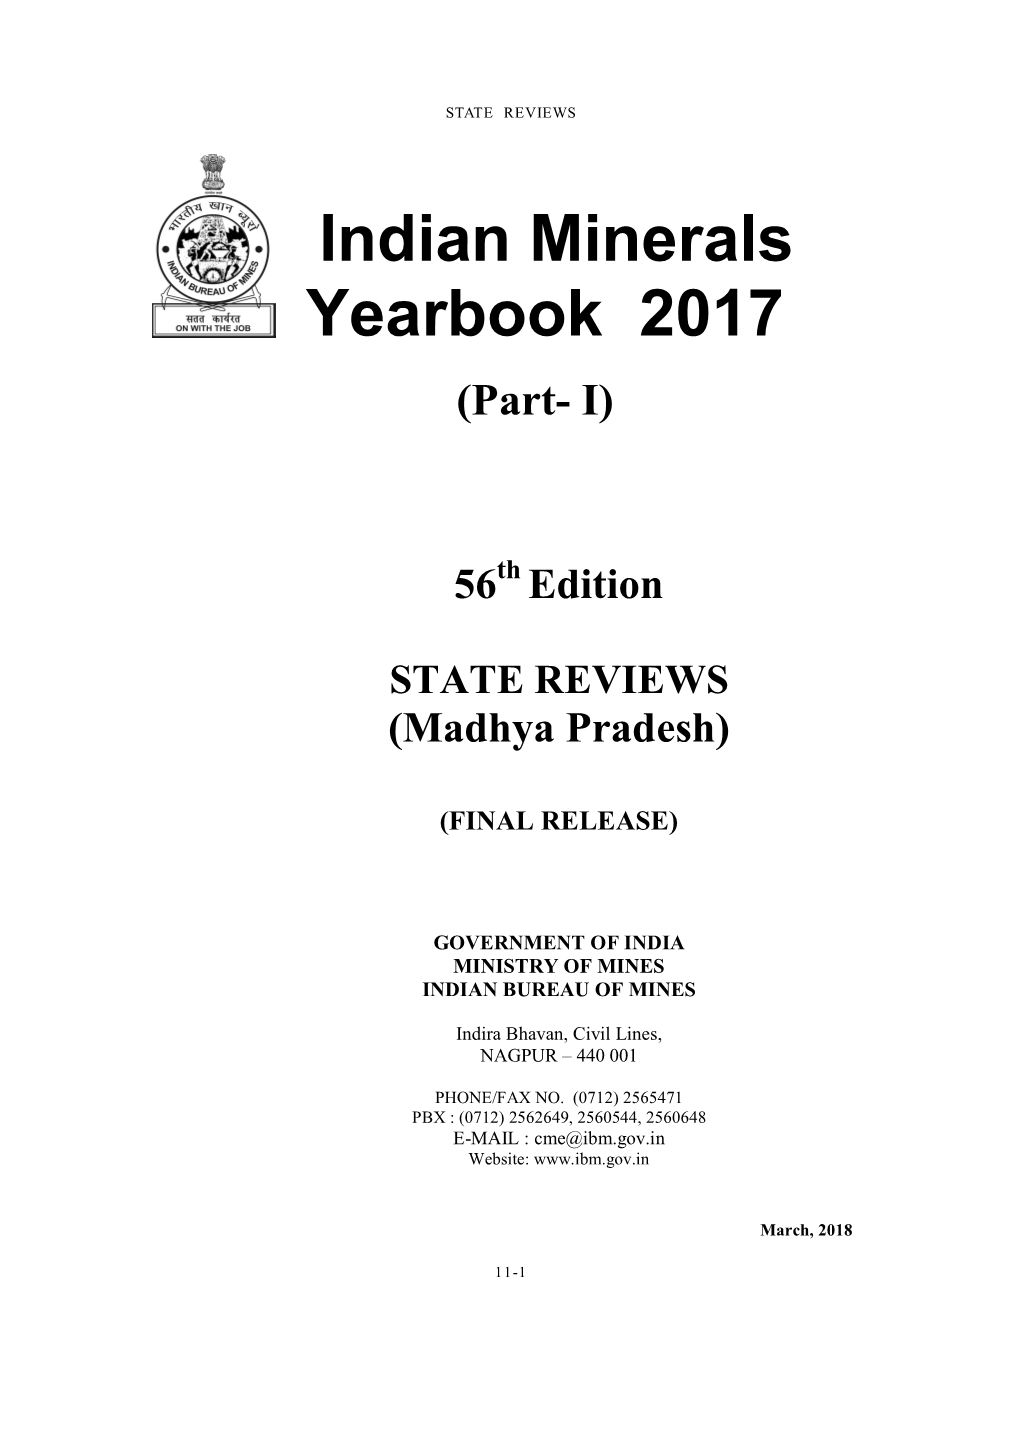 Indian Minerals Yearbook 2017